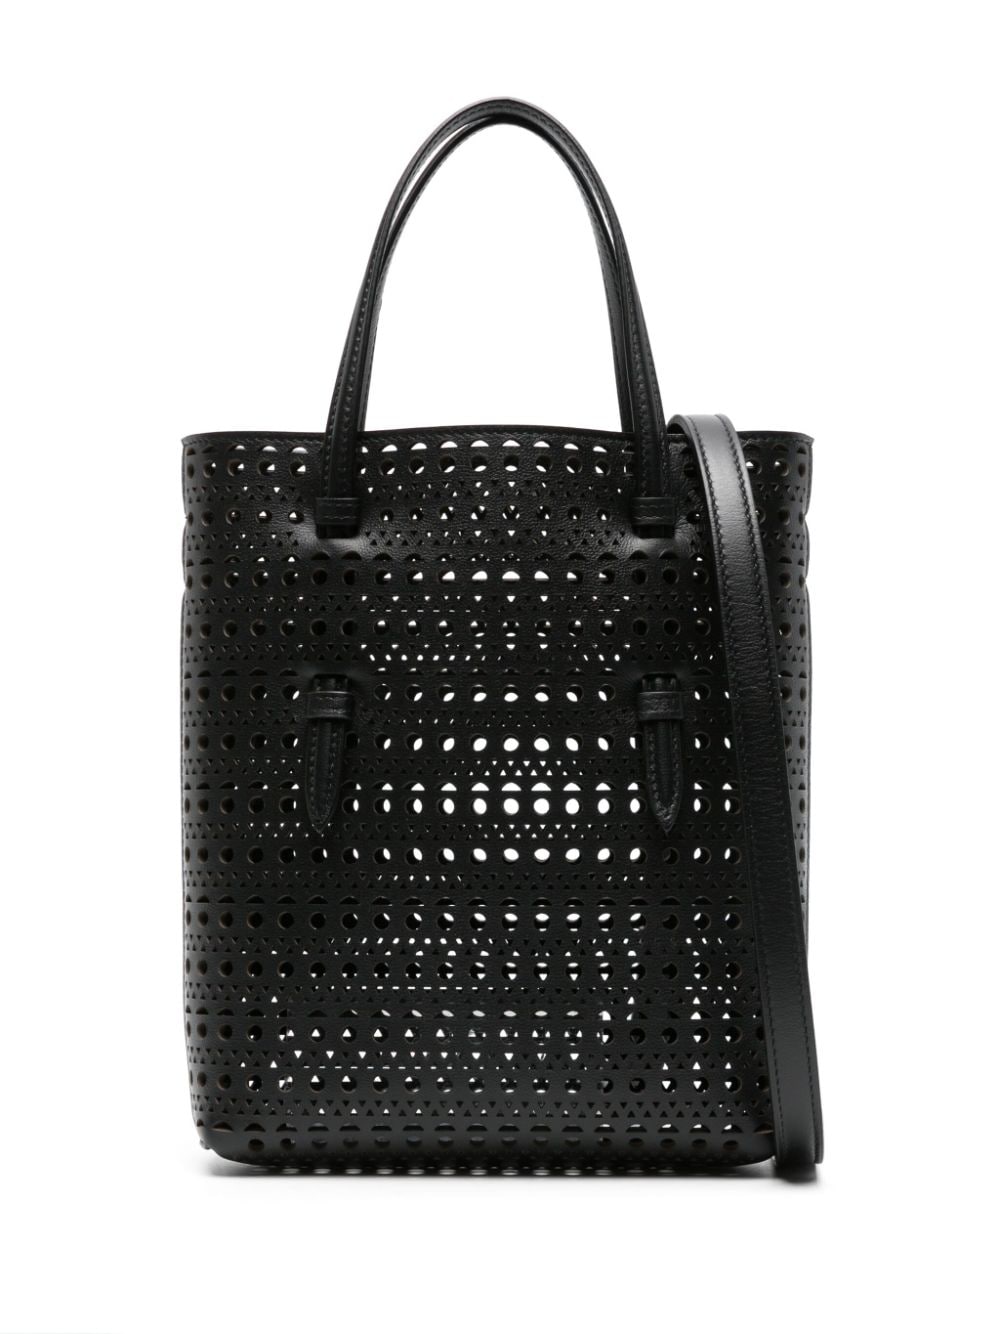 ALAIA Stylish Black Perforated Leather Handbag for Women